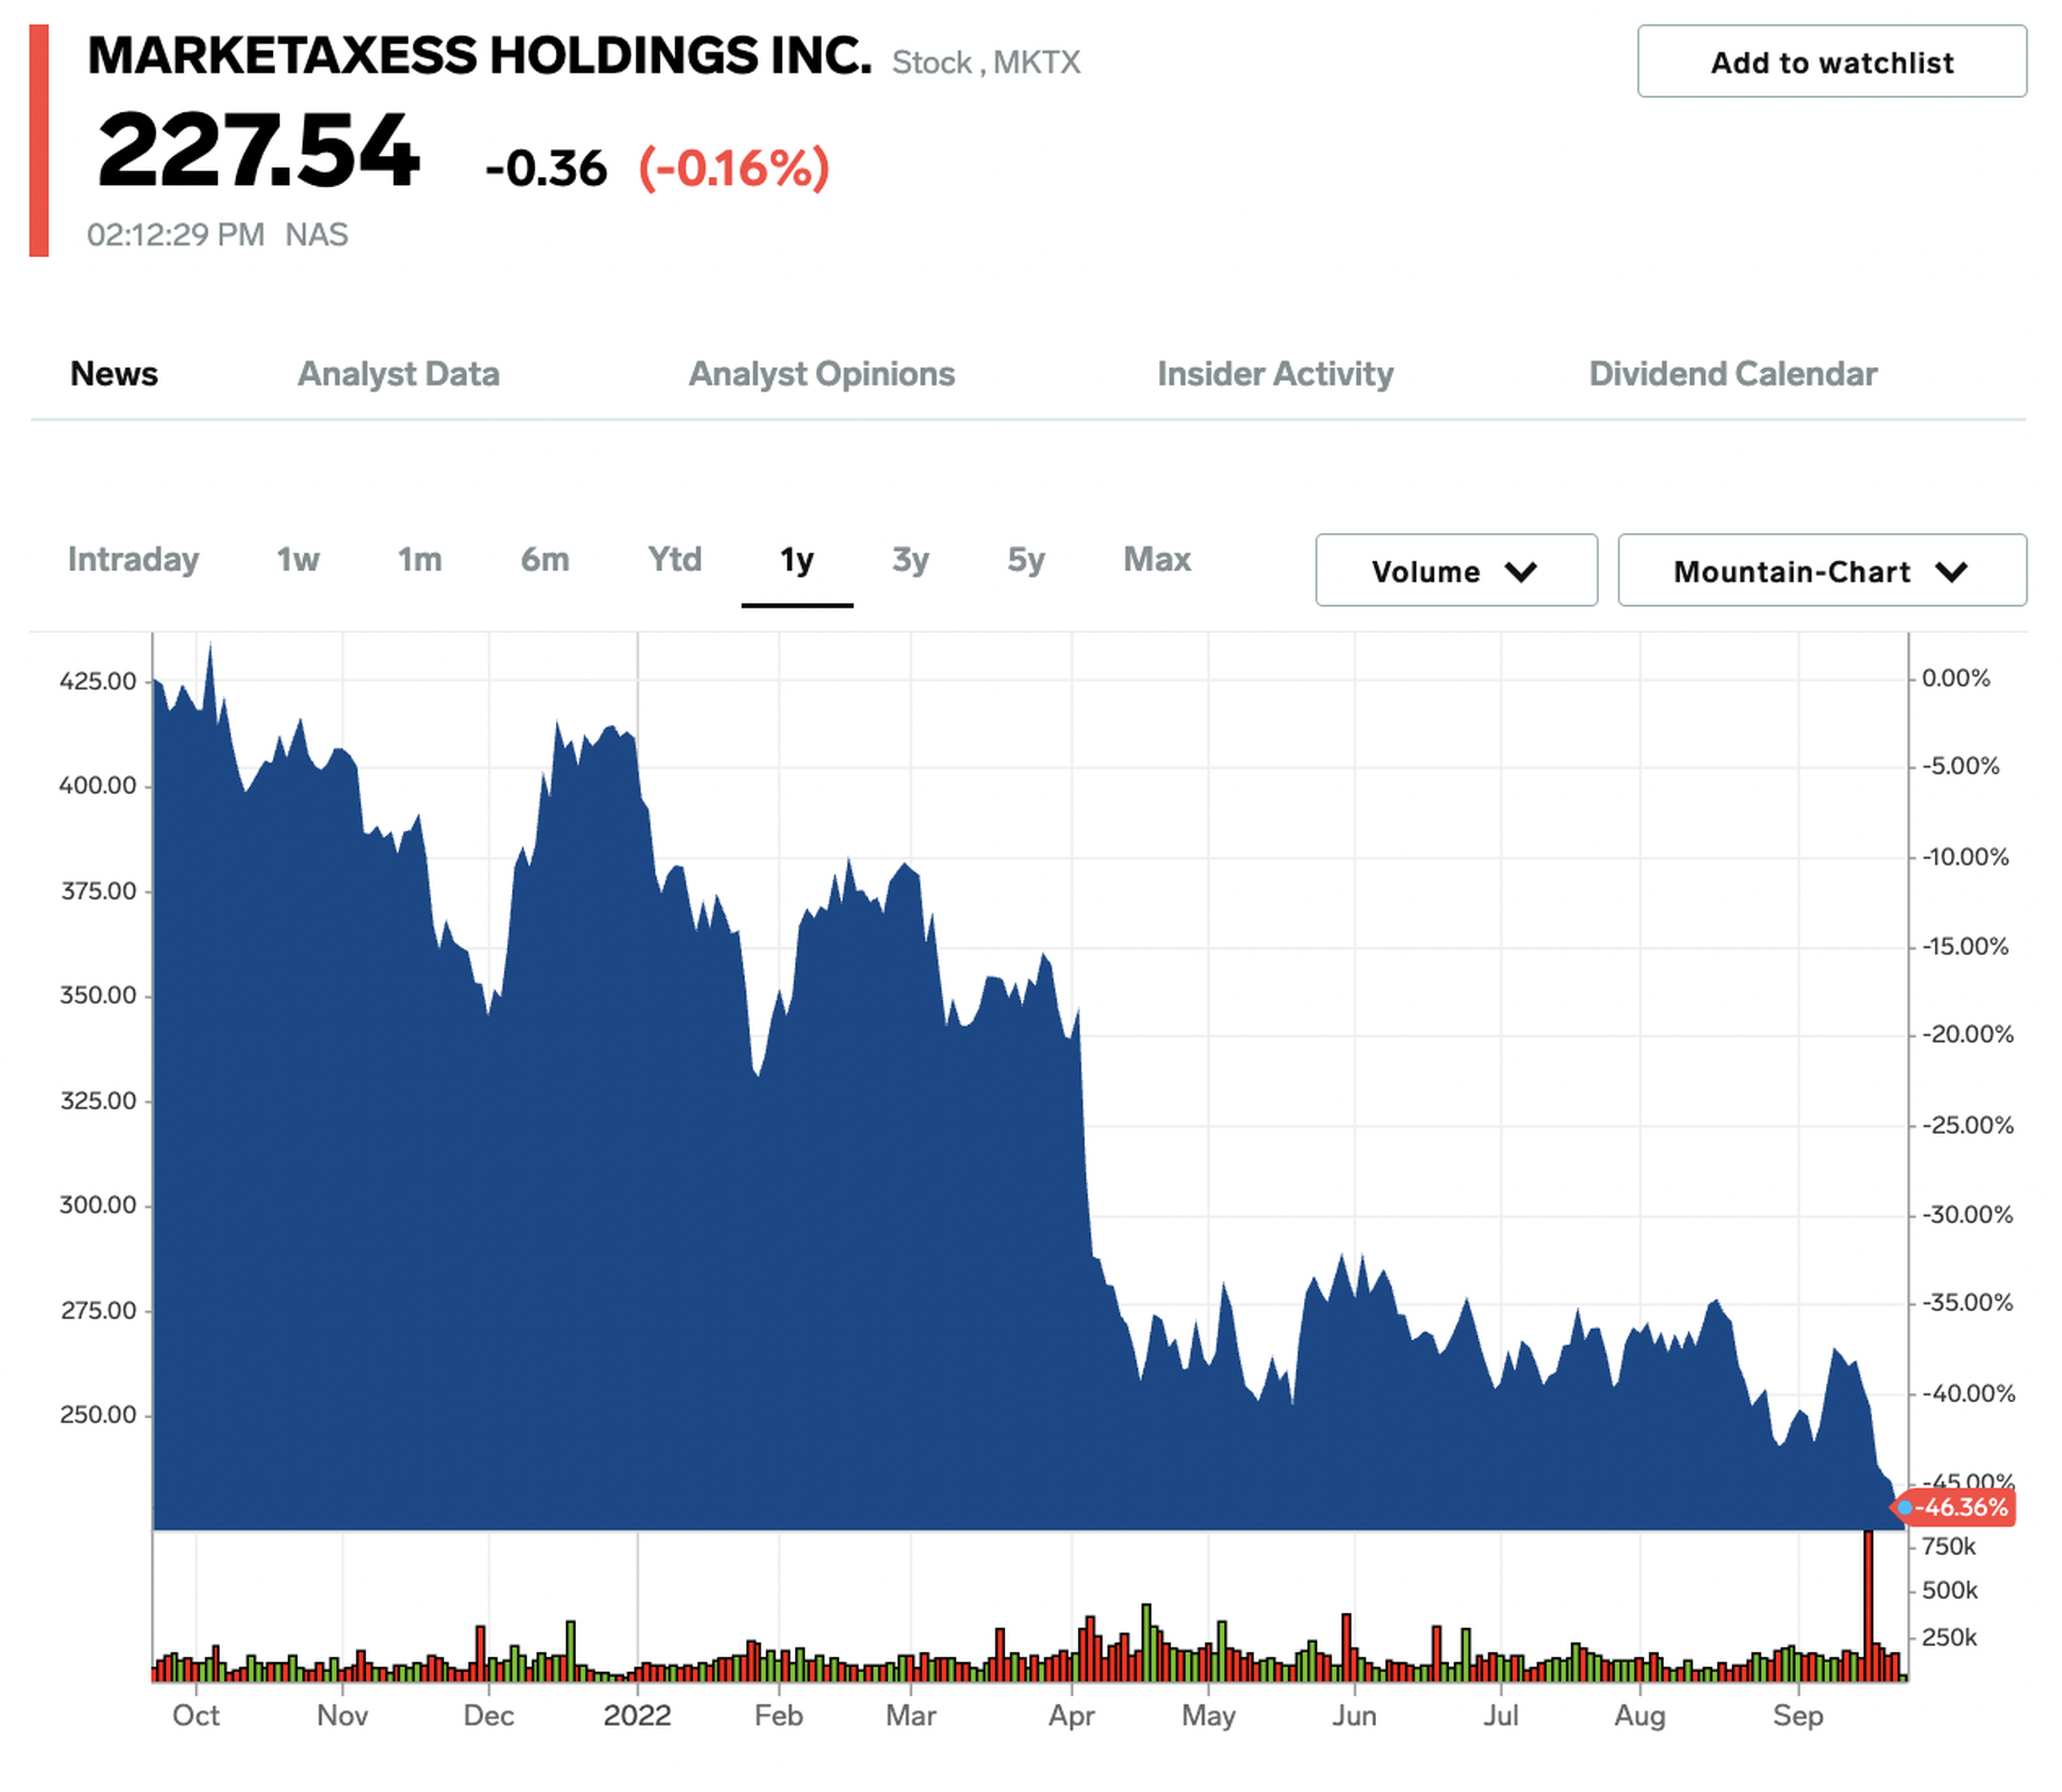 MarketAxess Holdings